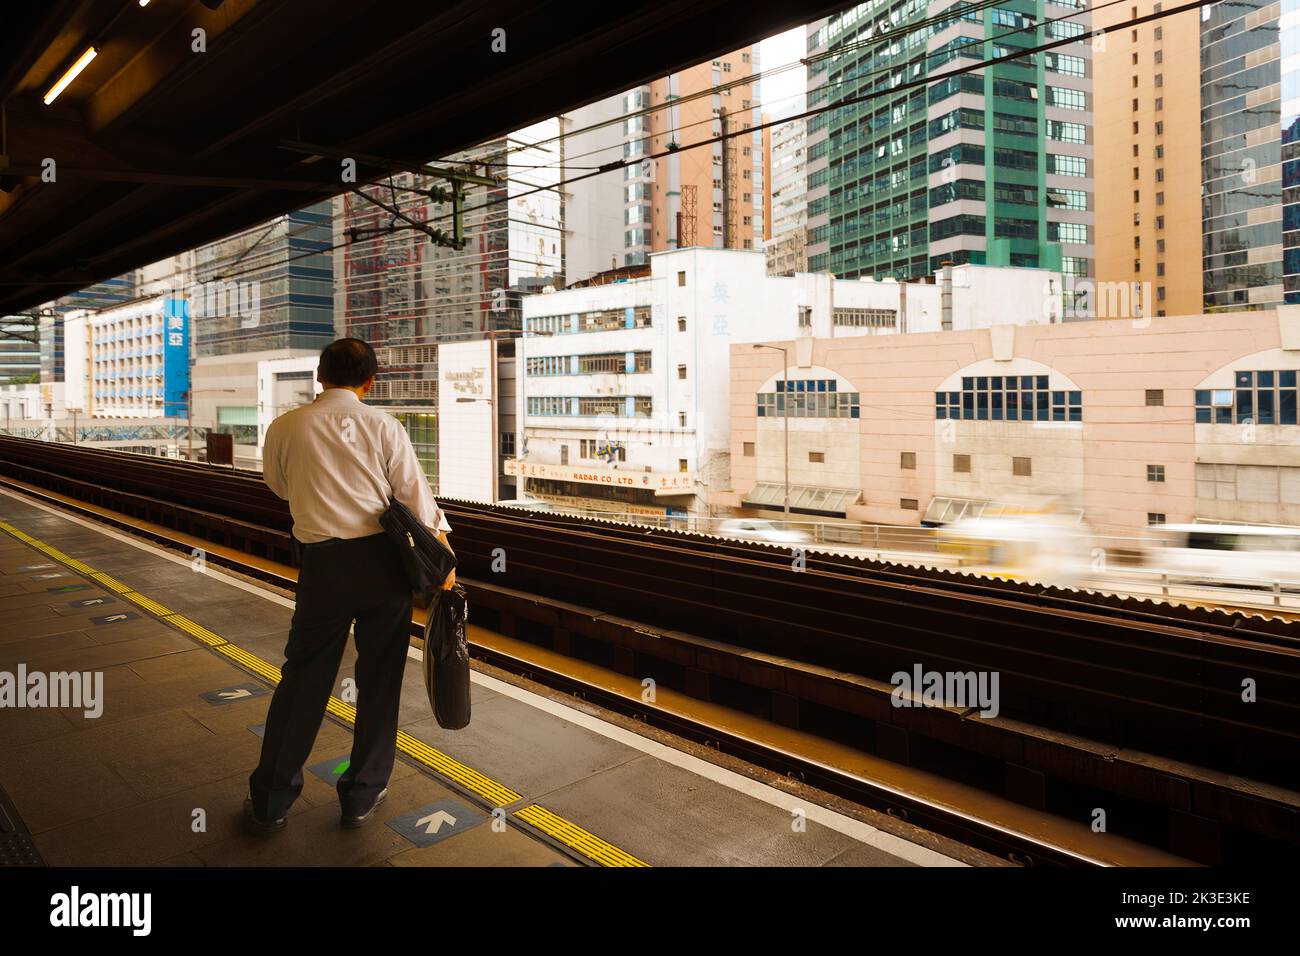 Kowloon Bay, Hong Kong, China, Asia - Man waiting for the train at railway station with buildings of Kowloon Bay district. Stock Photo